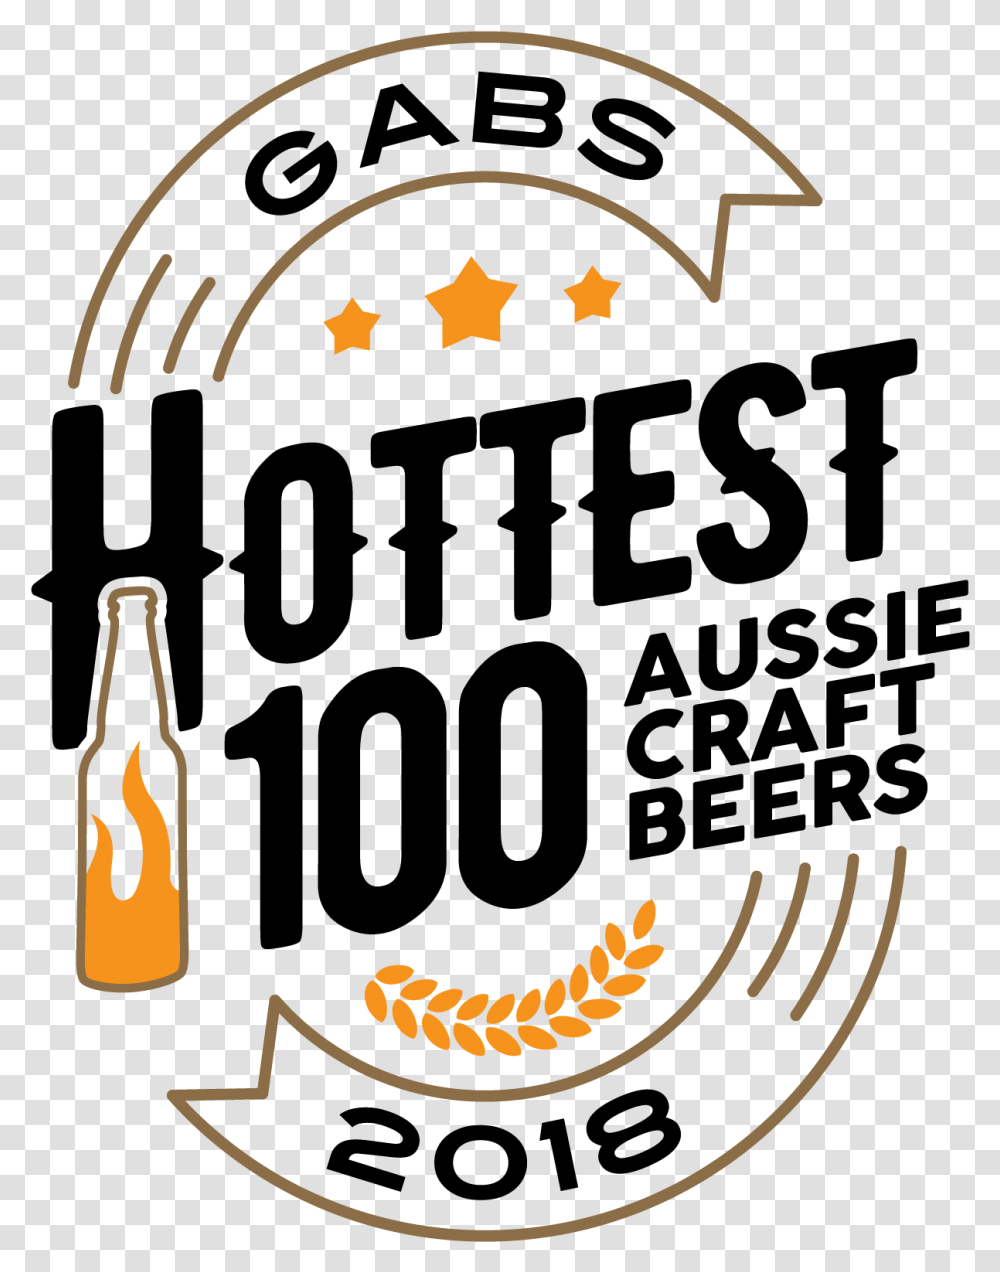 Hottest 100 Aussie Craft Beers Transparent Png